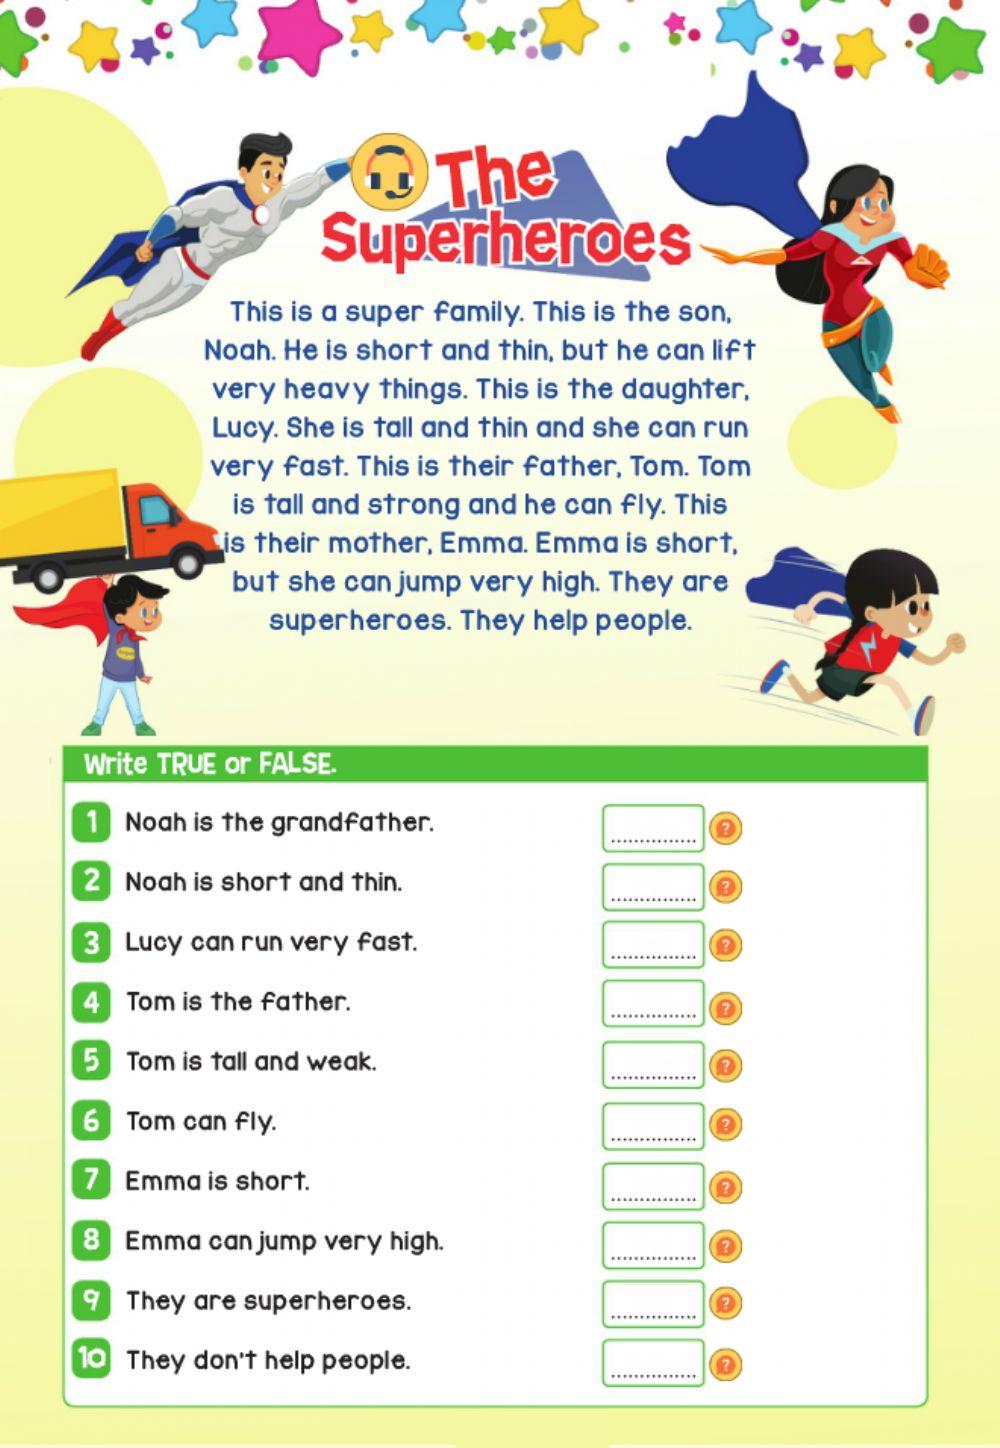 The Superheroes